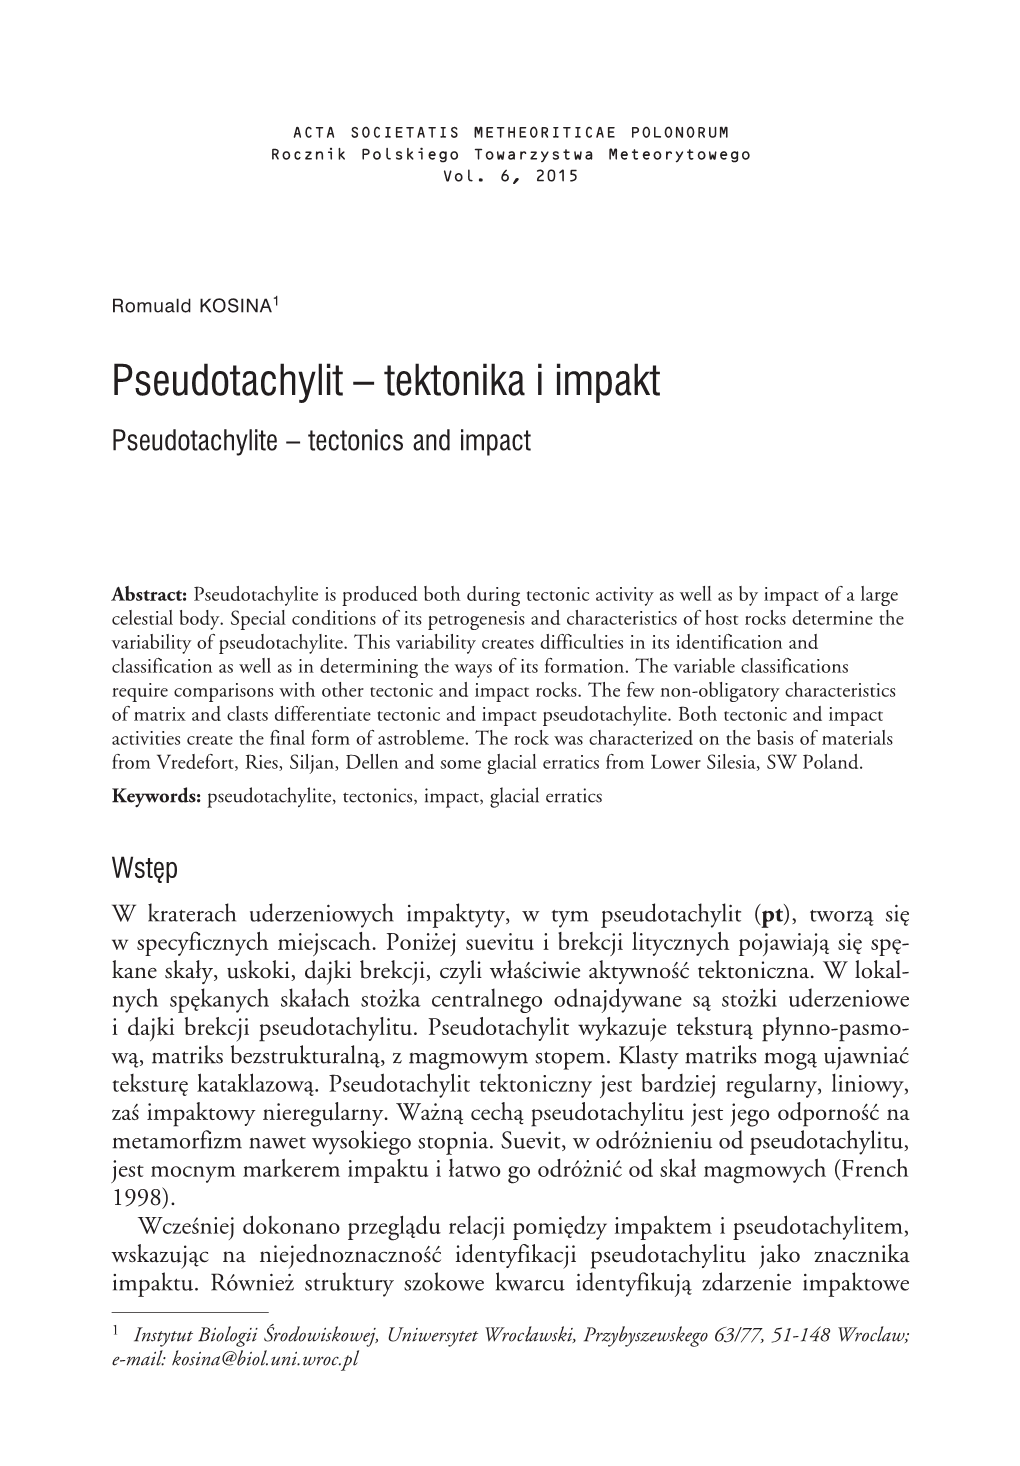 Pseudotachylit – Tektonika I Impakt